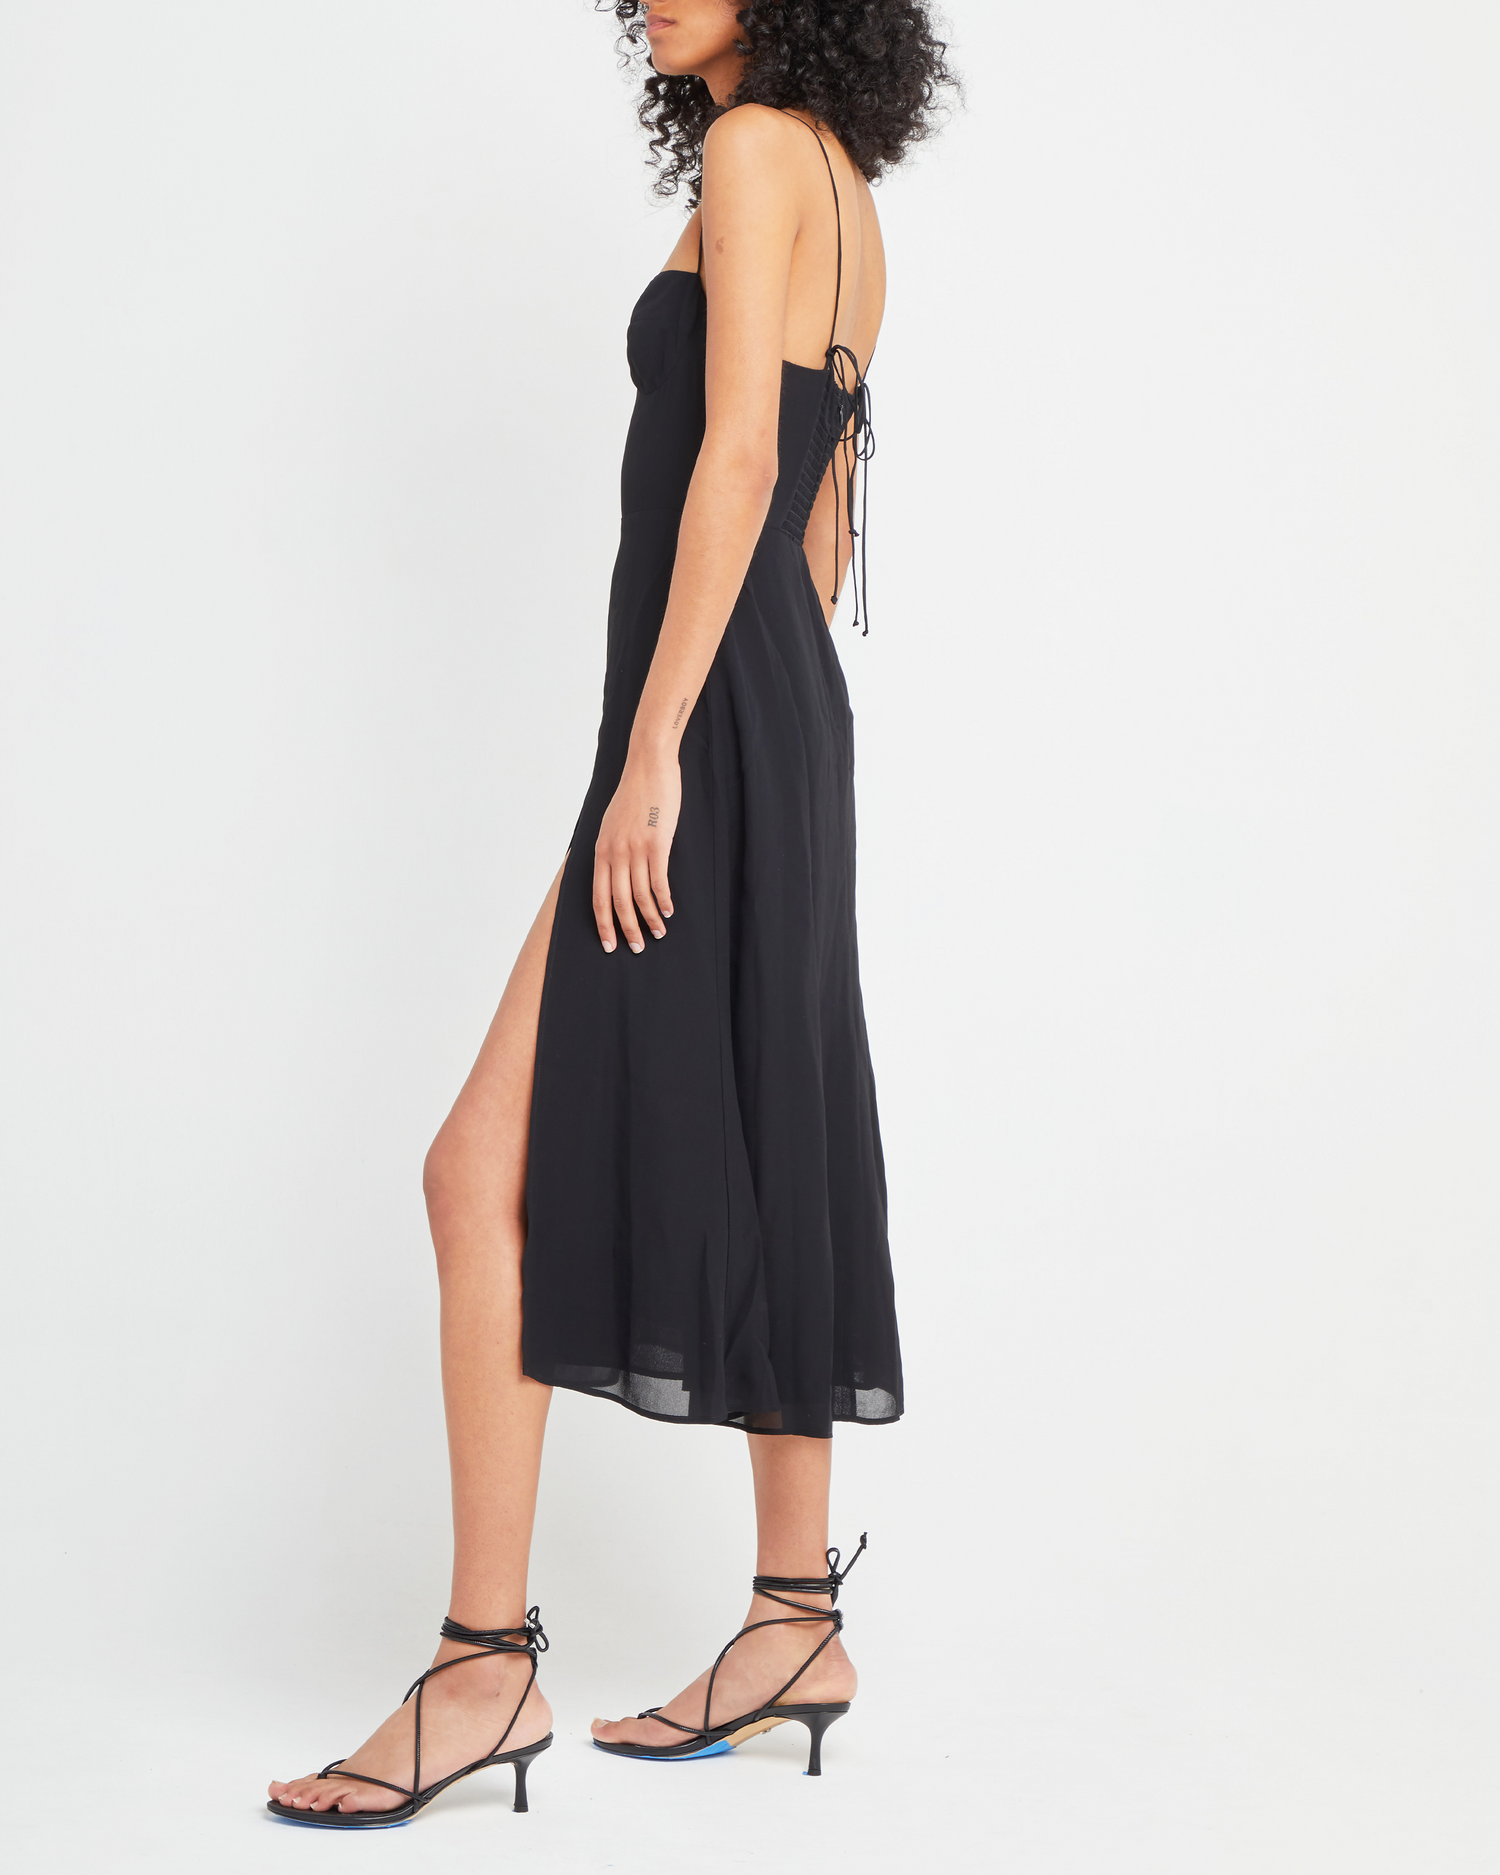 Fourth image of Venus Dress, a black midi dress, tie straps, spaghetti straps, side slit, bodice